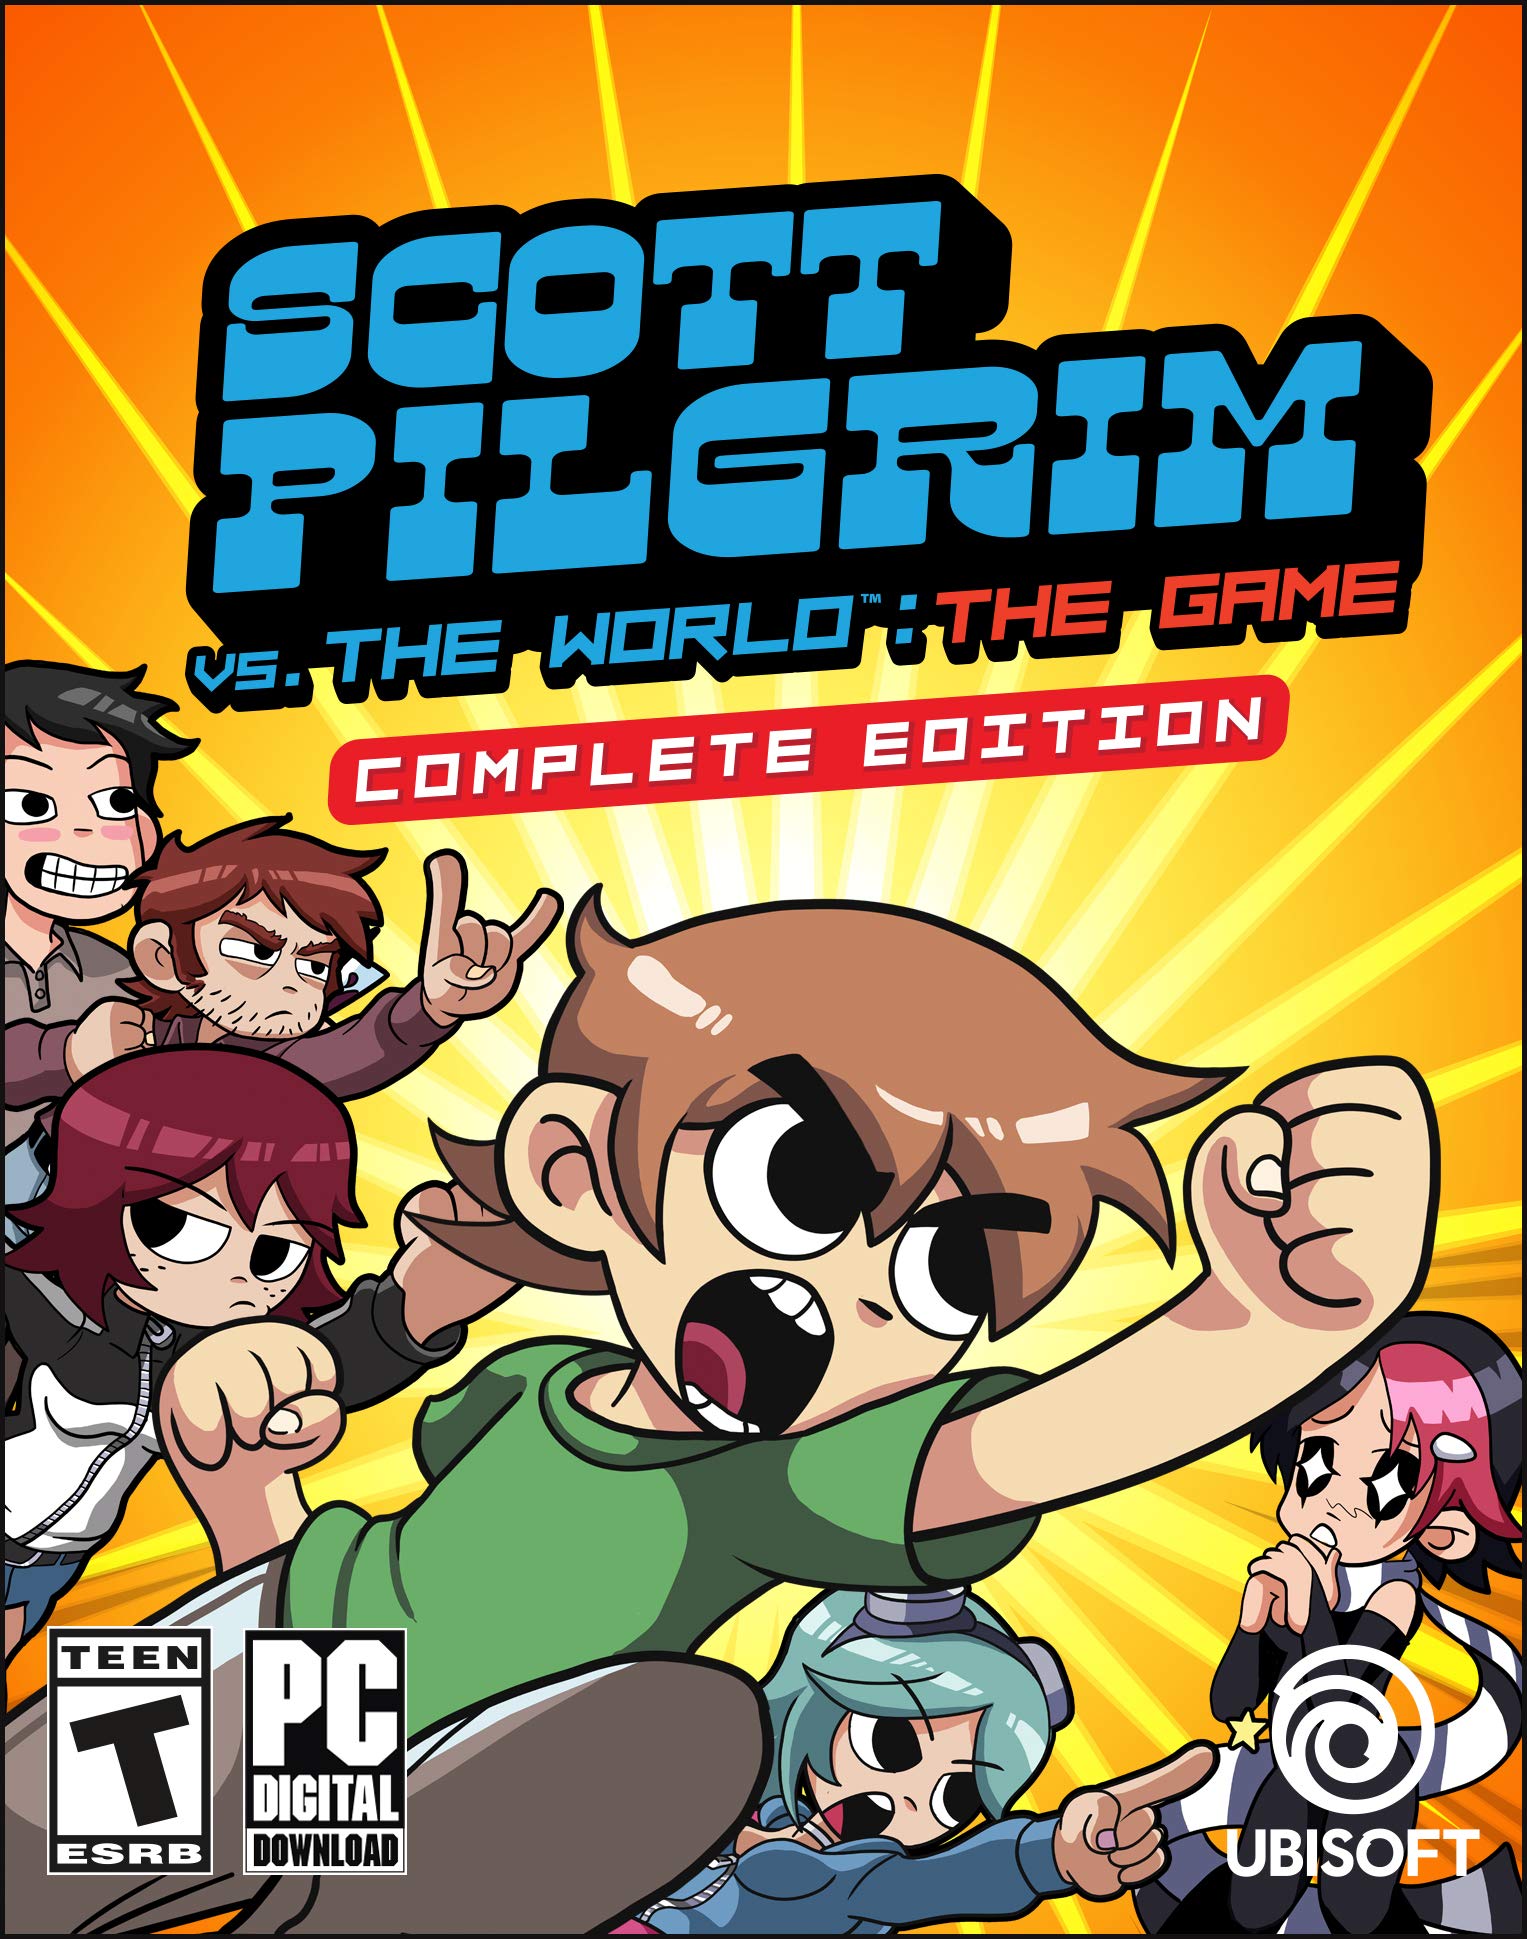 Scott Pilgrim vs. The World: The Game Complete | PC Code - Ubisoft Connect